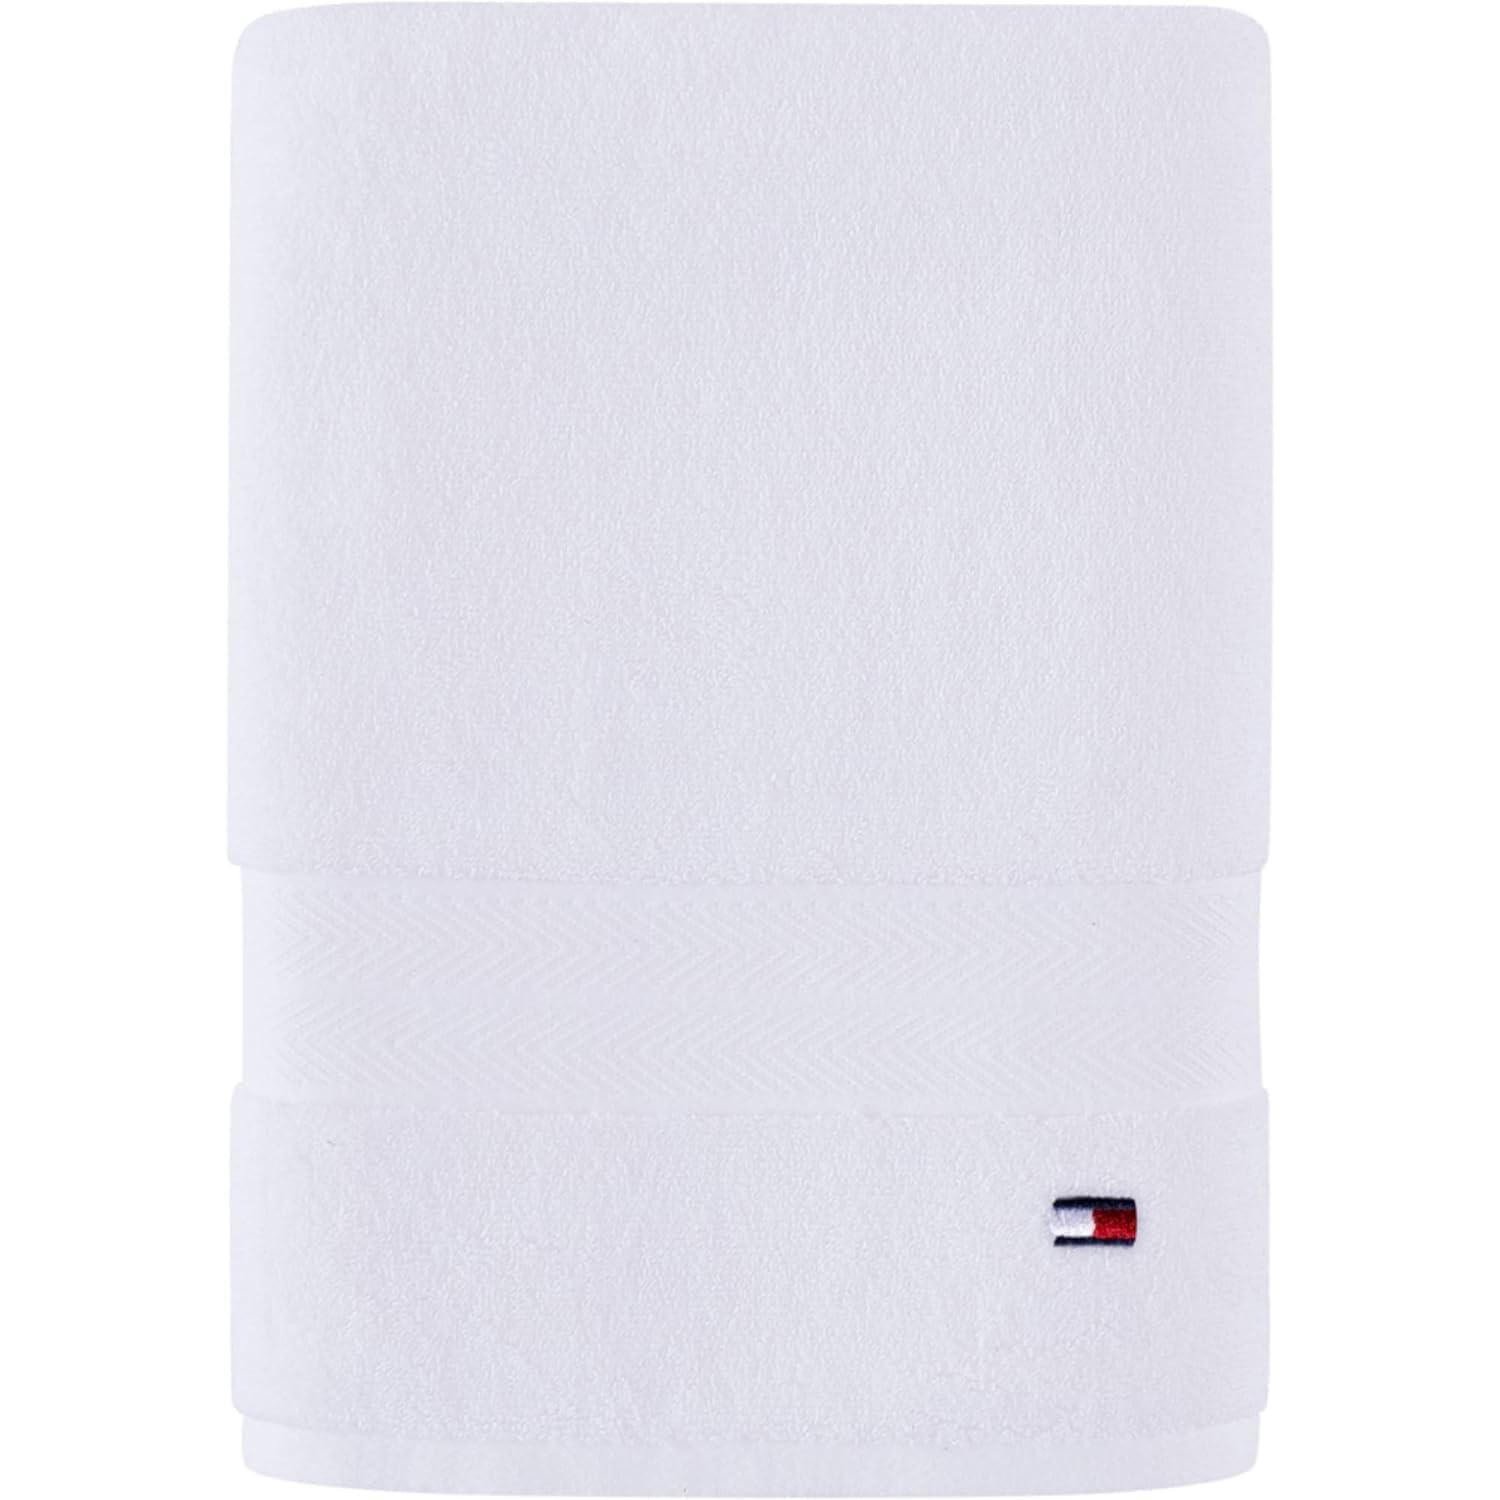 Tommy Hilfiger Modern American Solid Bath Towel for $6.99